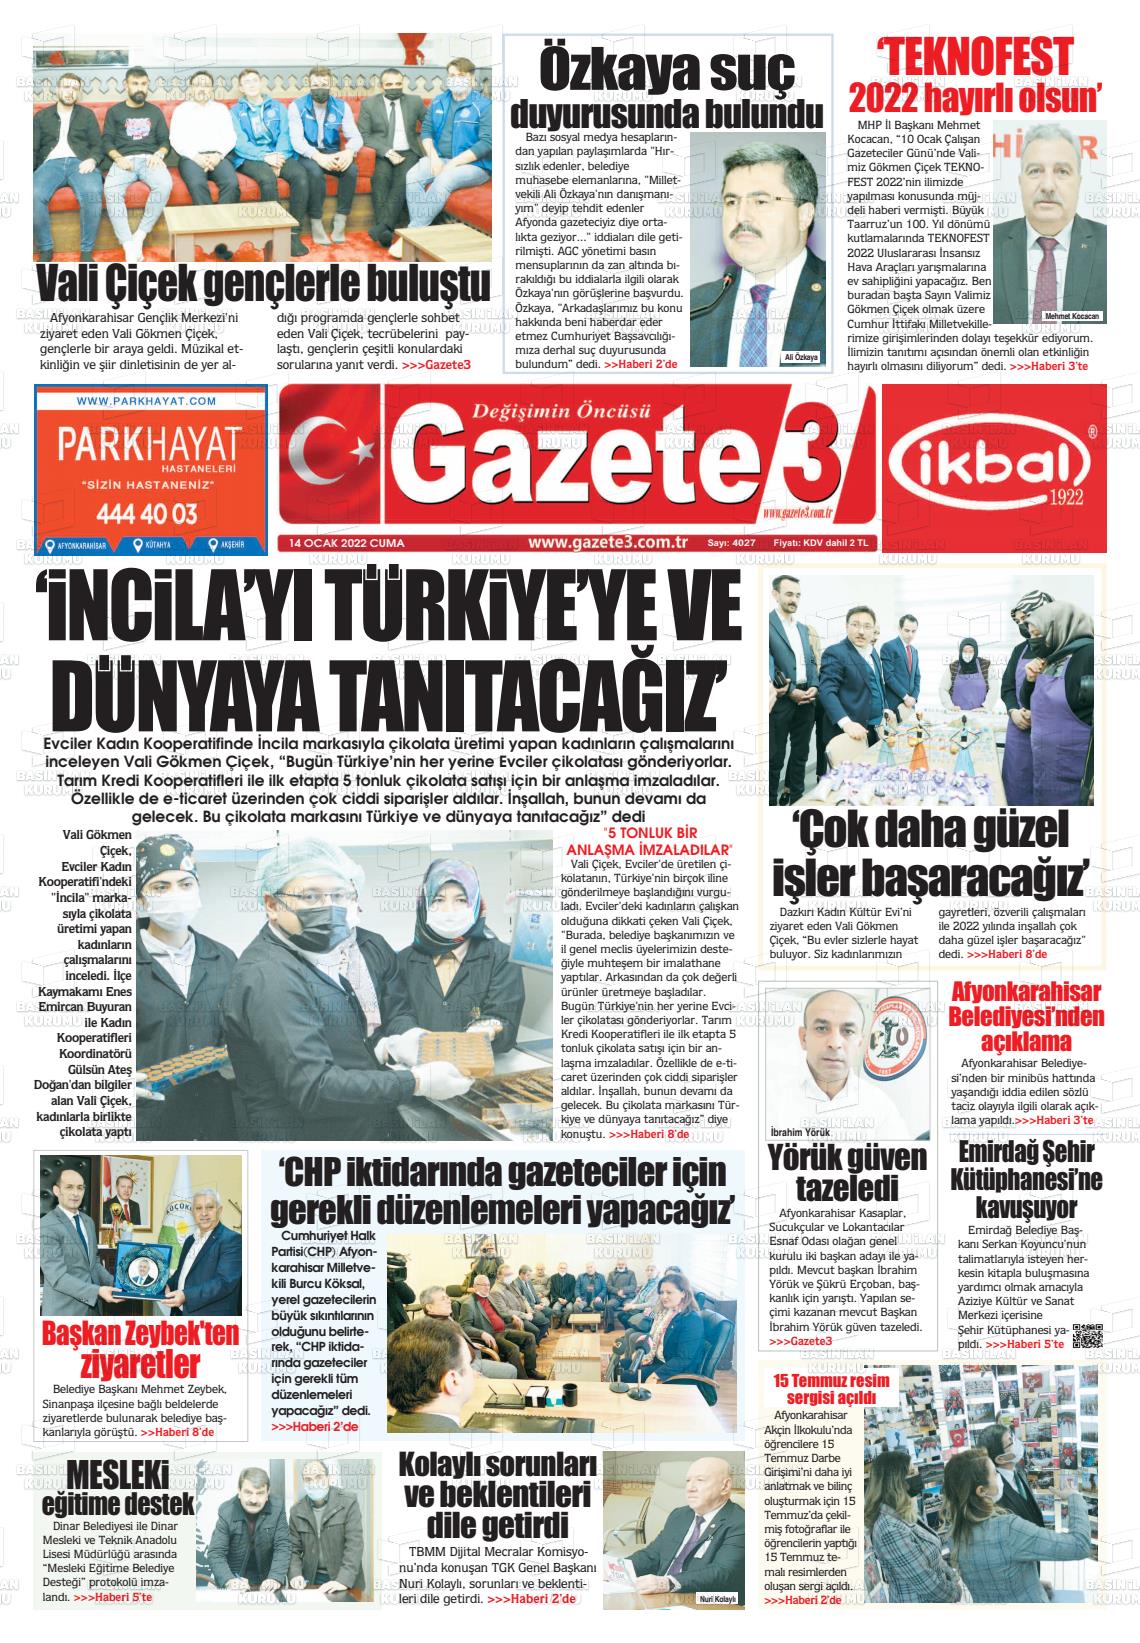 14 Ocak 2022 Gazete 3 Gazete Manşeti